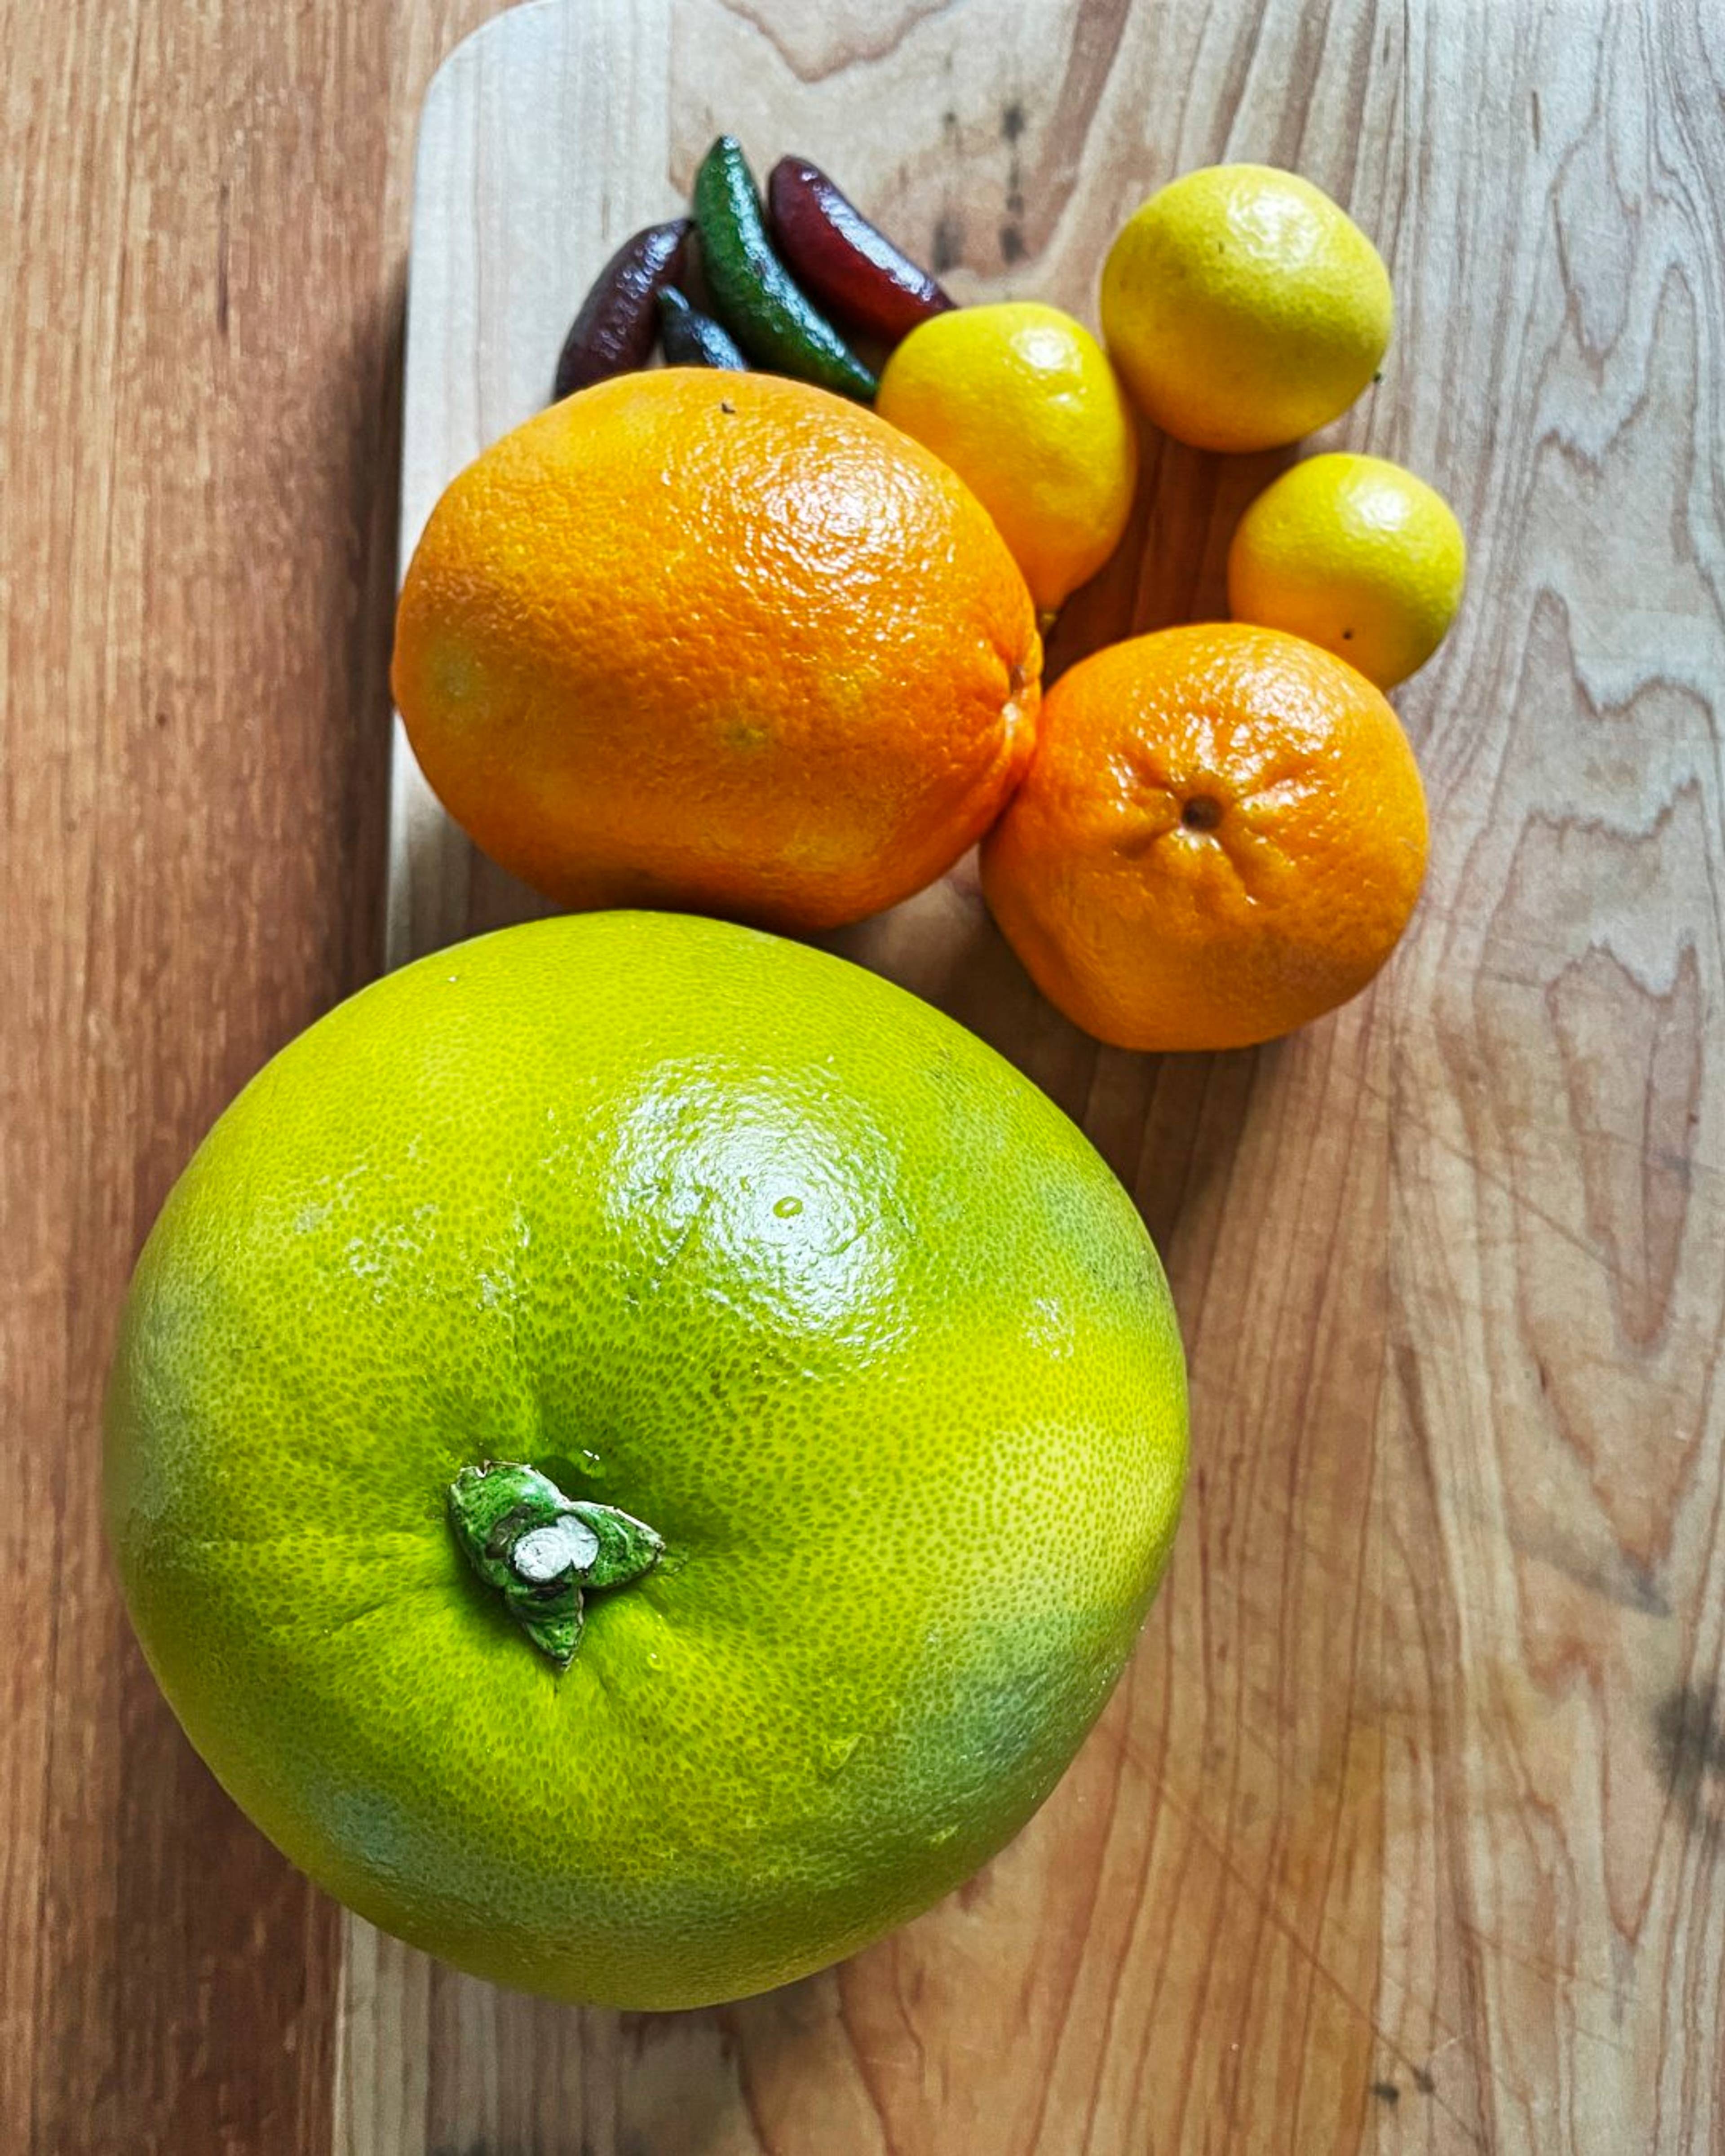 winter citrus varieties